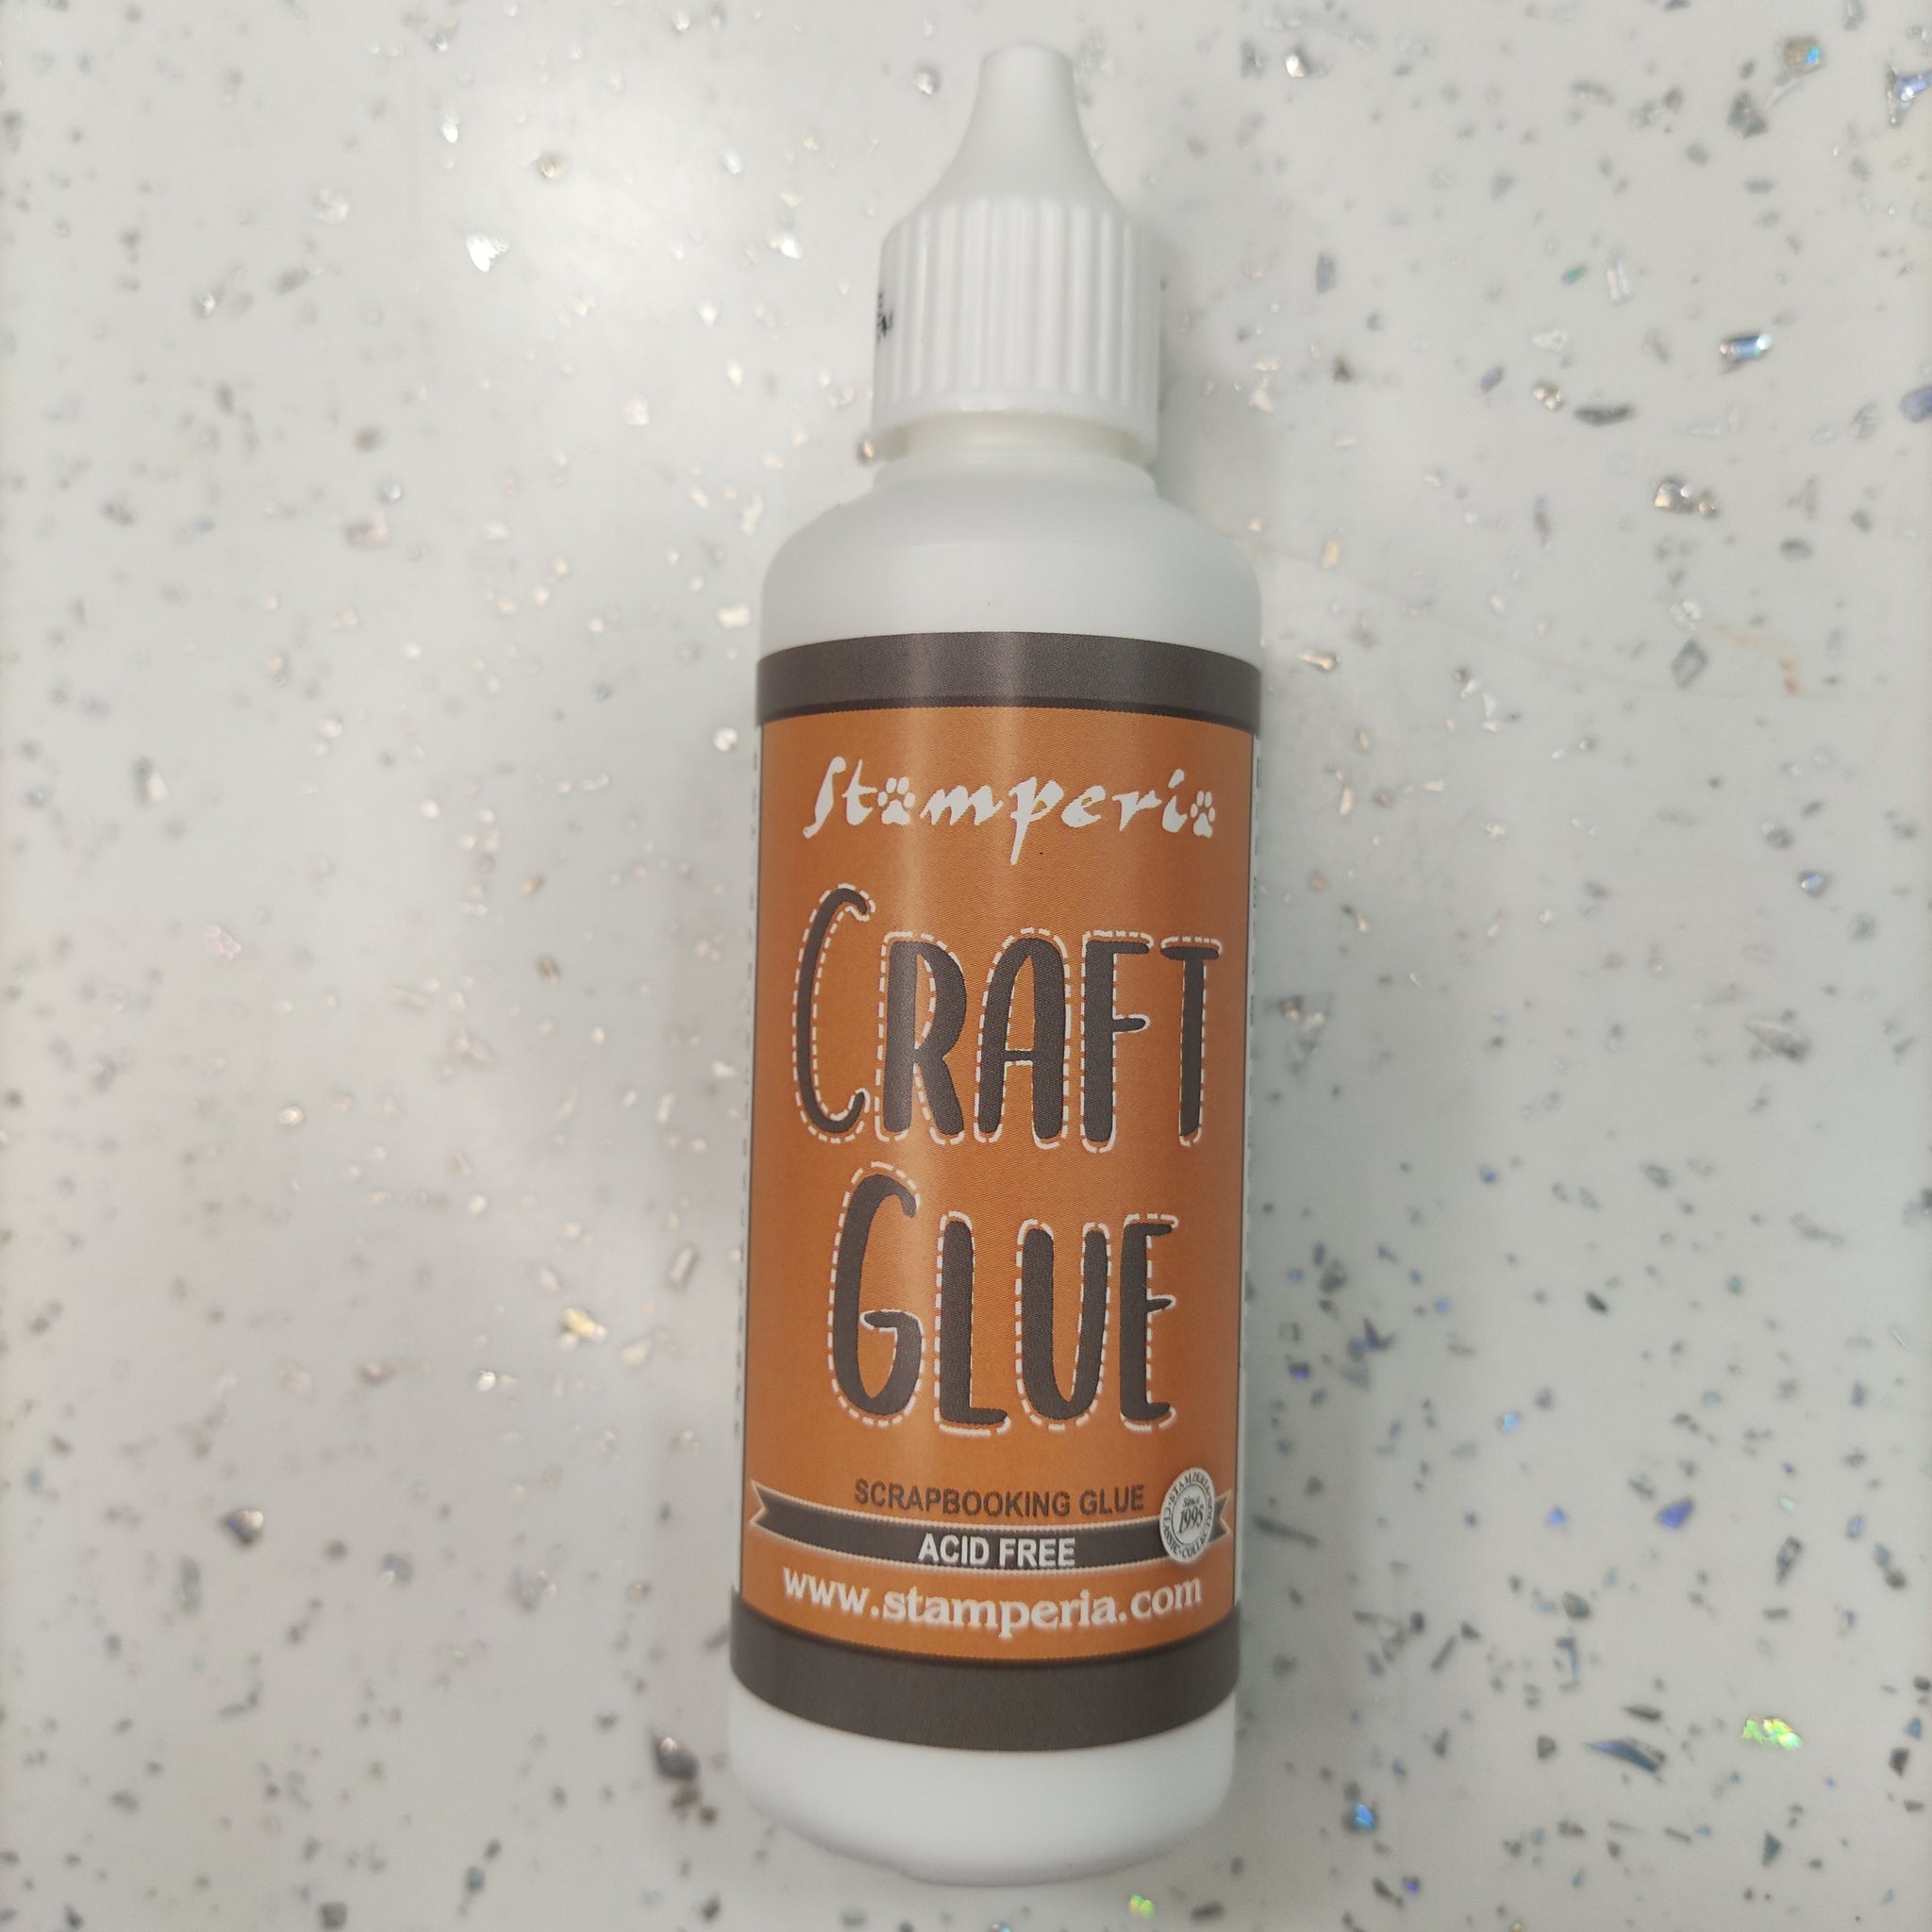 Craft glue